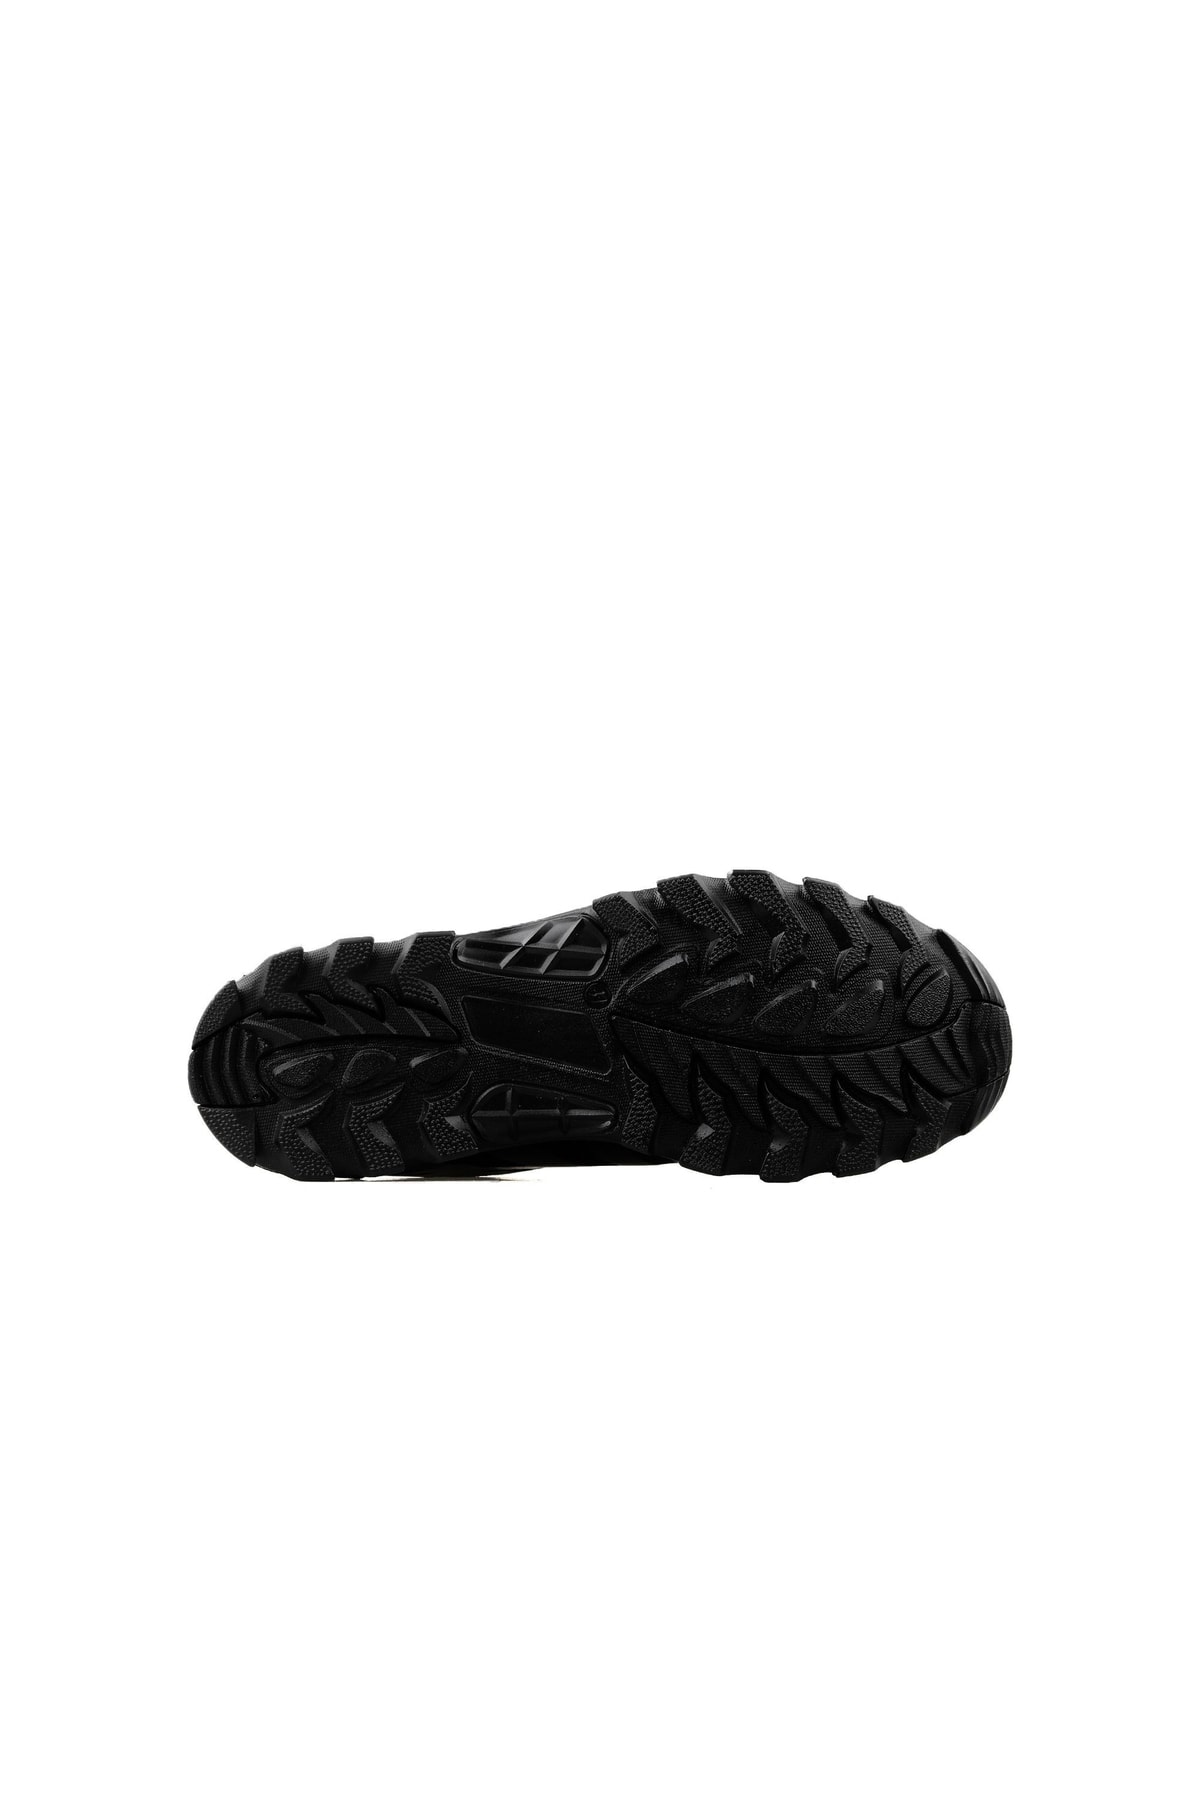 Scooter Tekstil Siyah Kadın Outdoor Ayakkabısı G5550ts Siyah SN9425